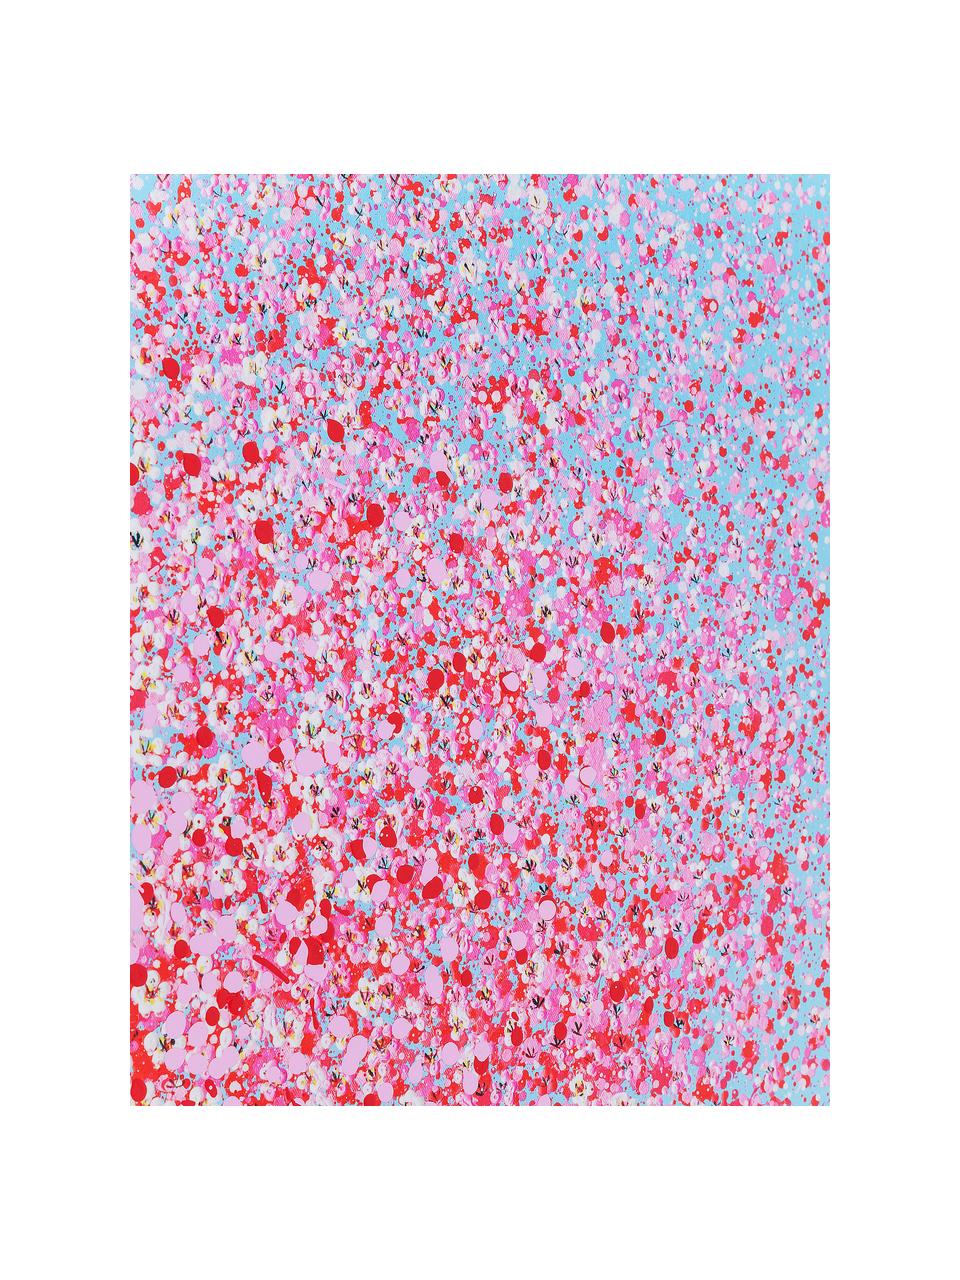 Stampa su tela Flower Boat, Immagine: stampa digitale con verni, Blu, rosa, Larg. 80 x Alt. 100 cm